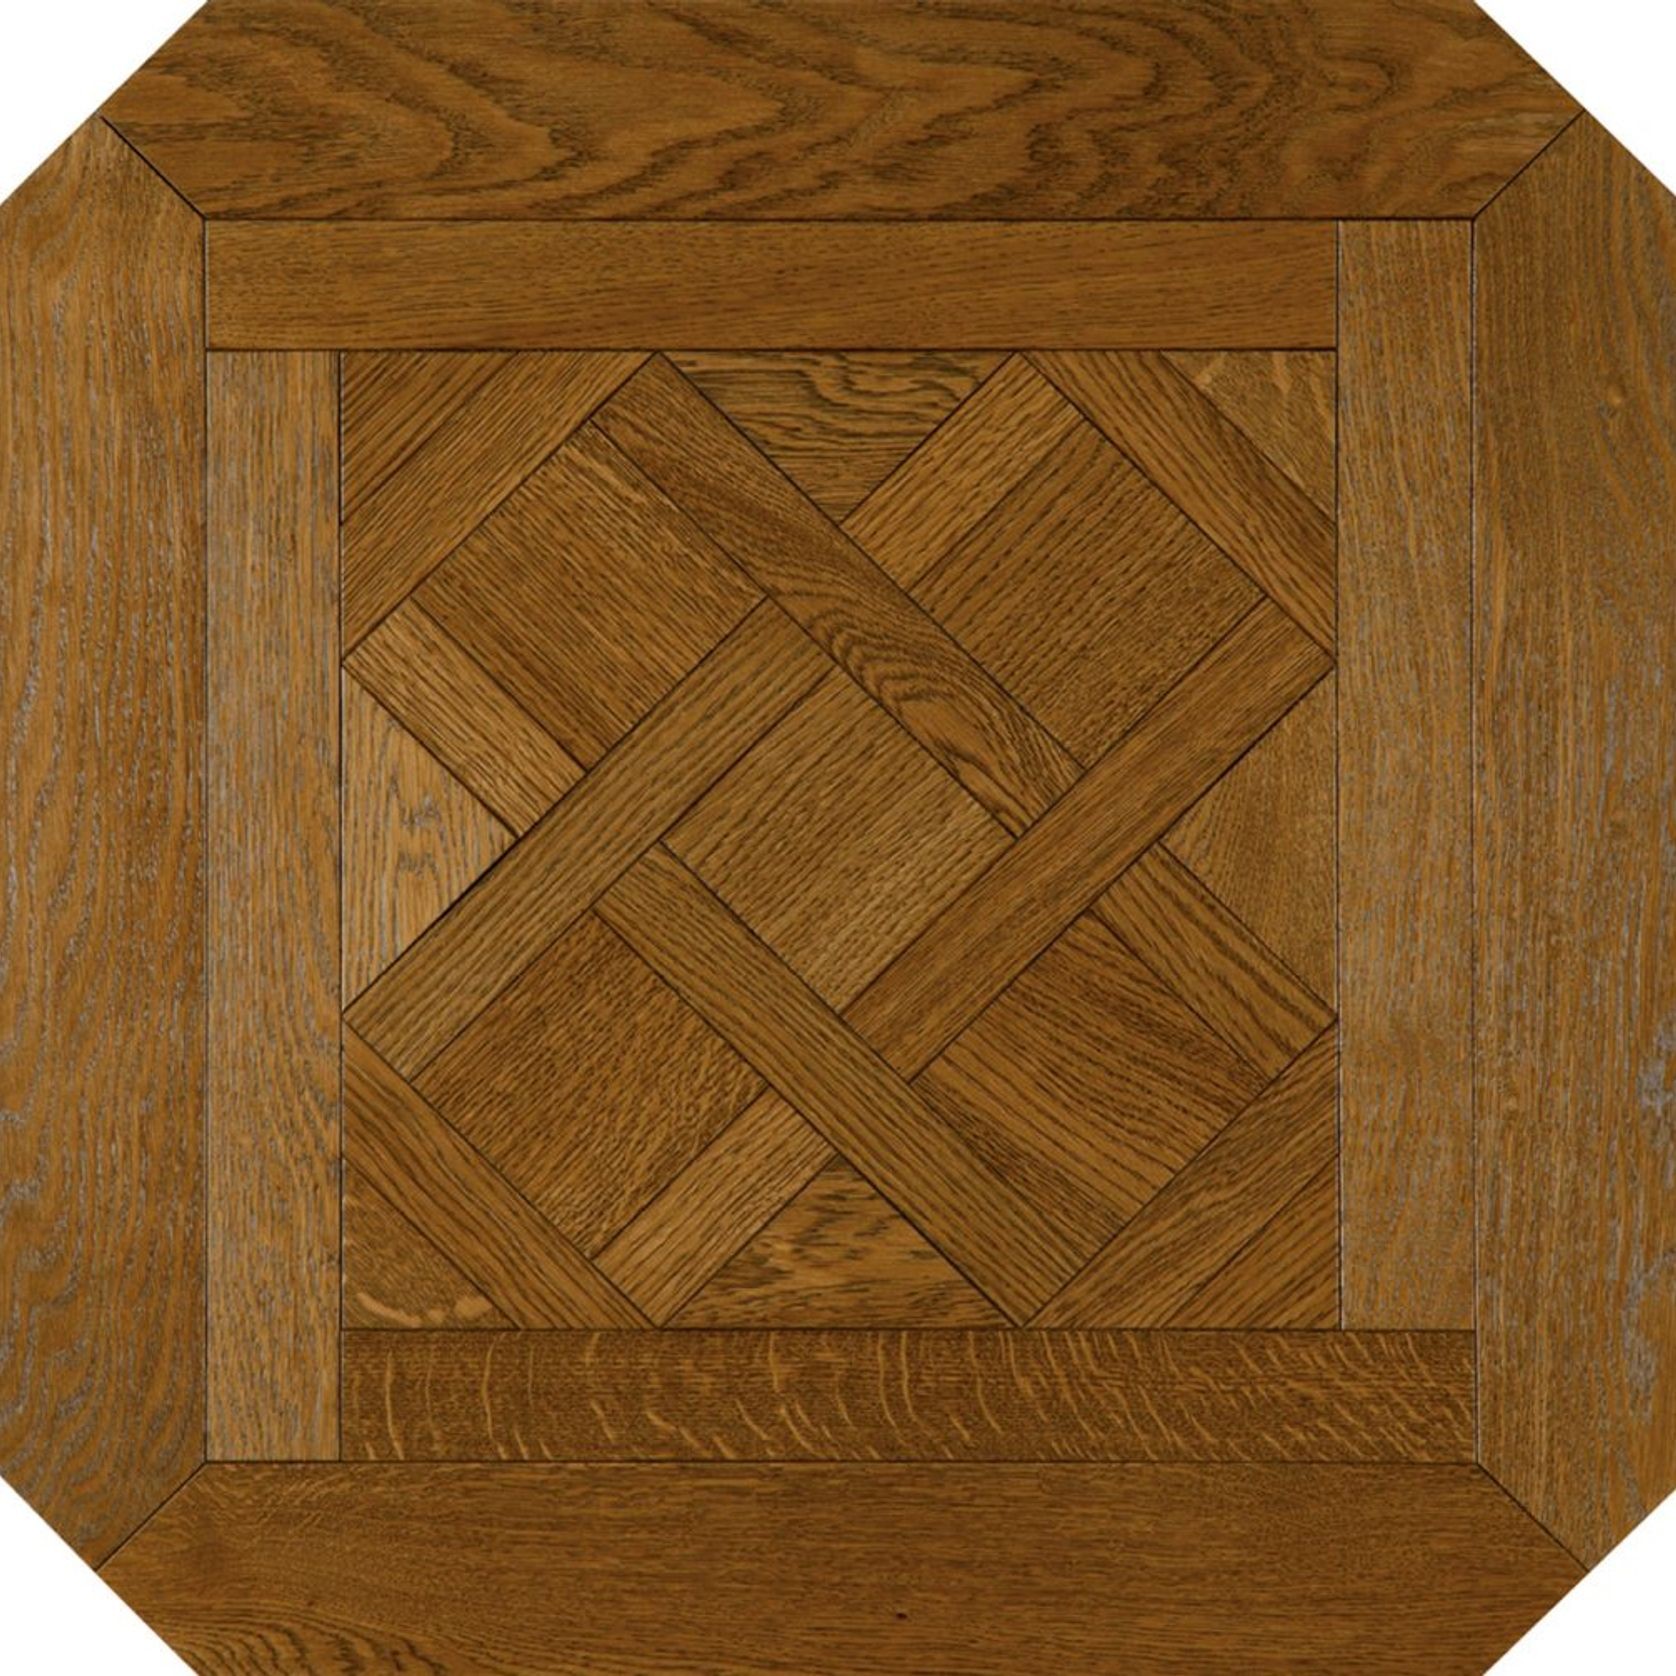 Parquet Patterns by IPF - Timber & Parquet Flooring gallery detail image